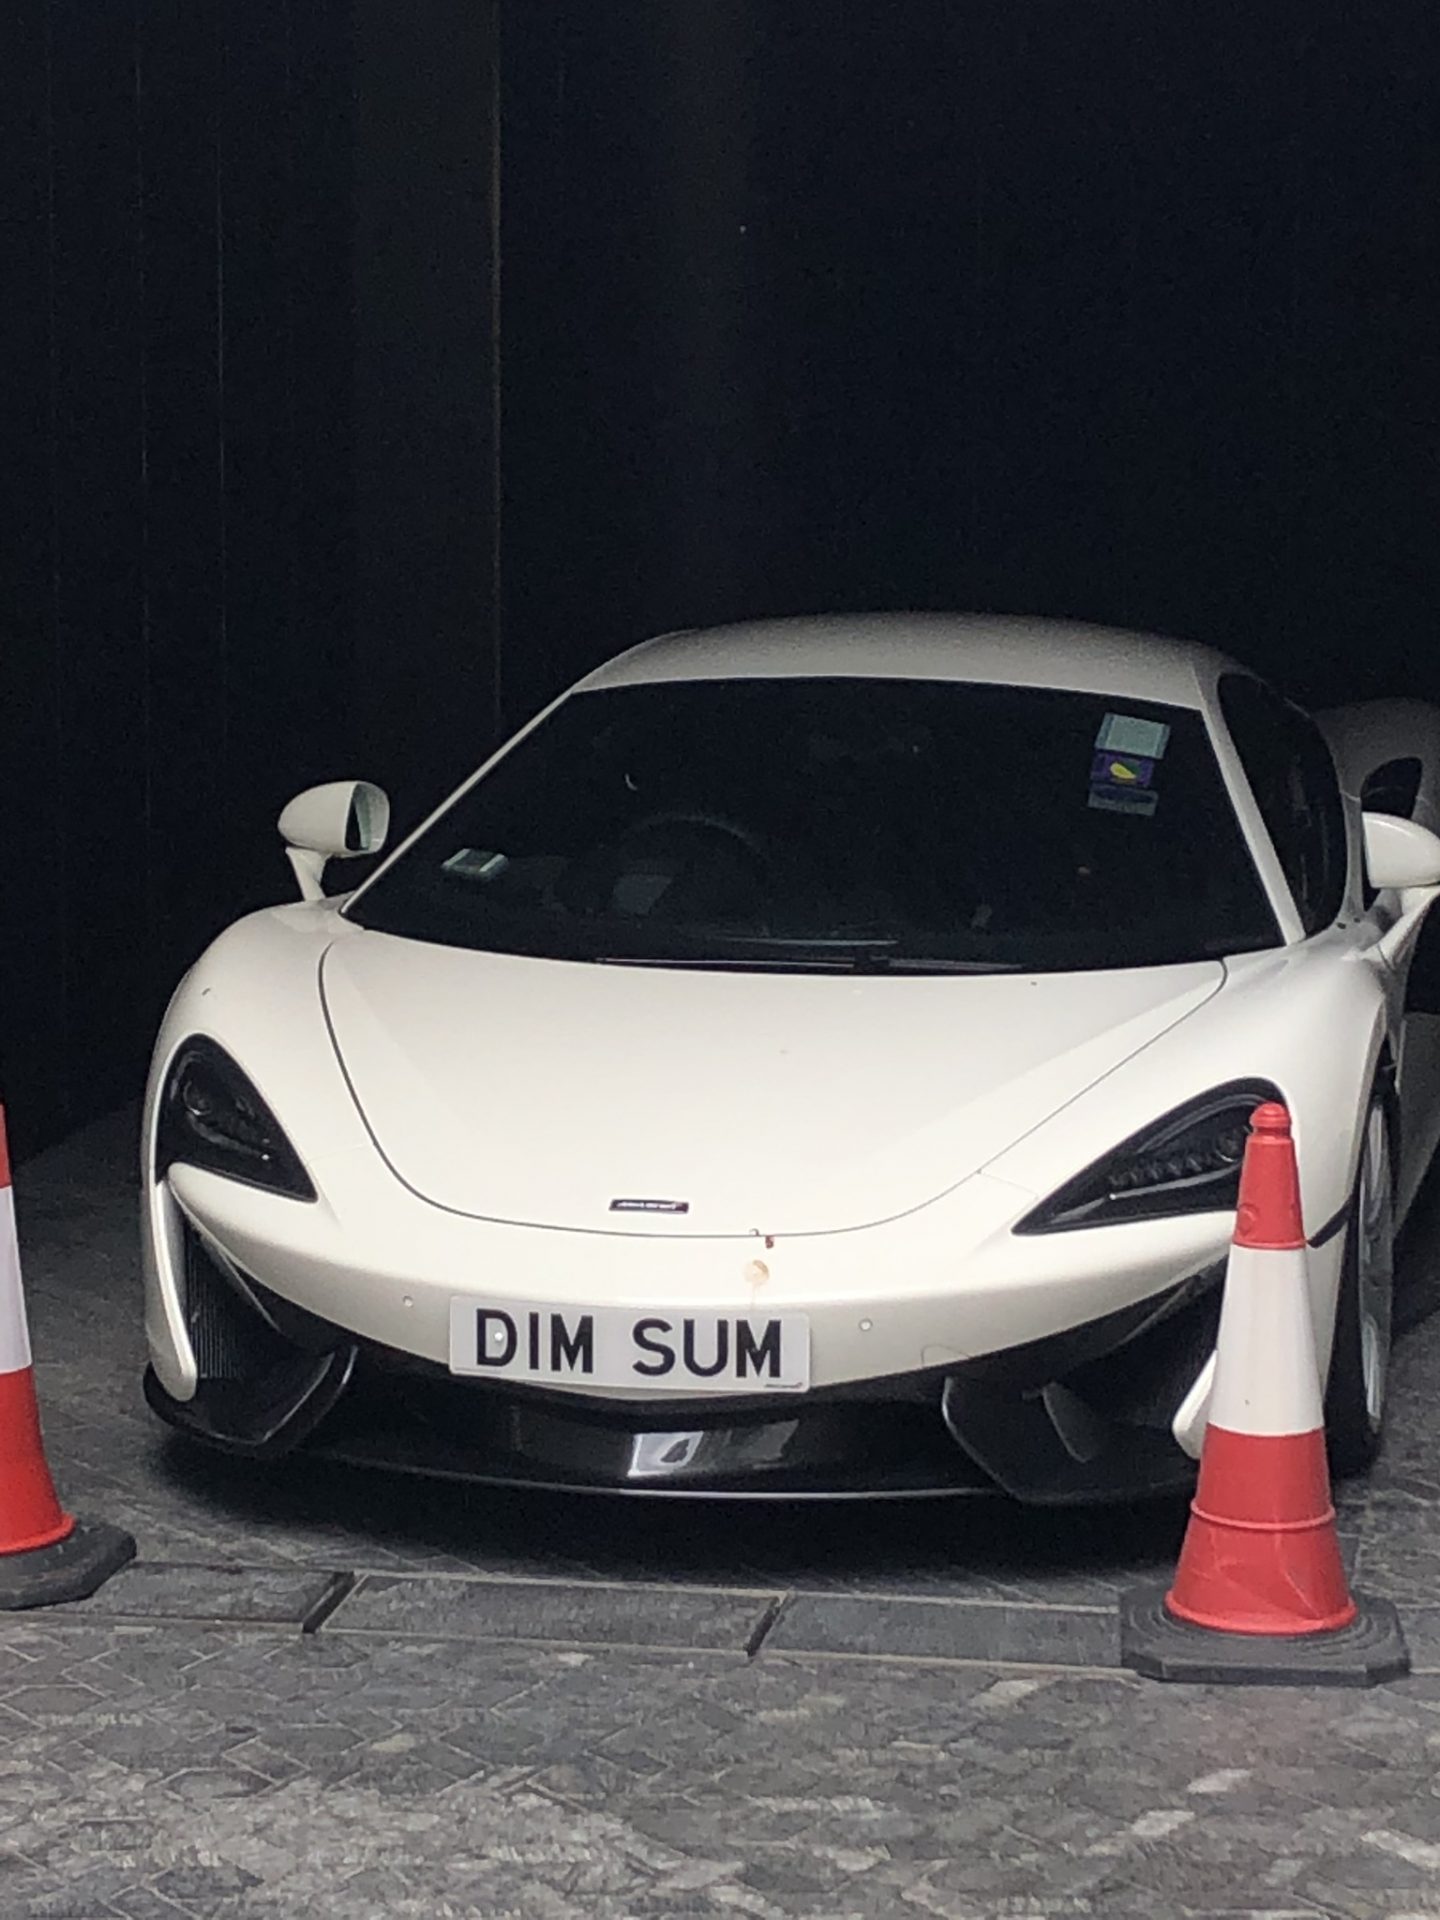 Dim Sum numberplate in Hong Kong